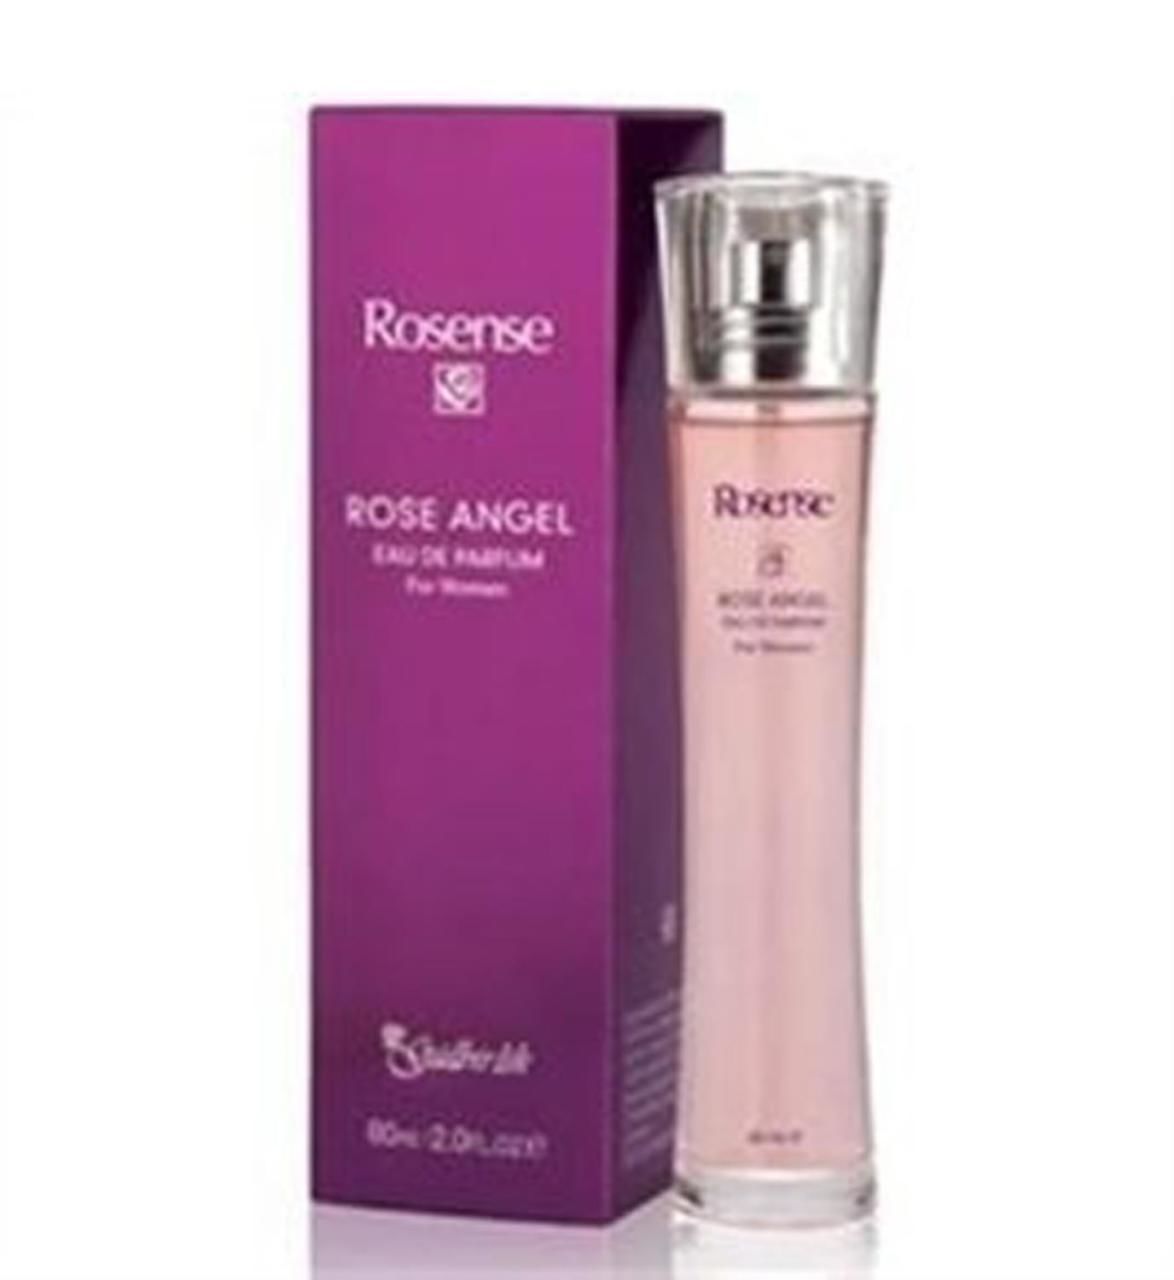 Rosense Rose Angel Bayan Parfüm 60 Ml Edp